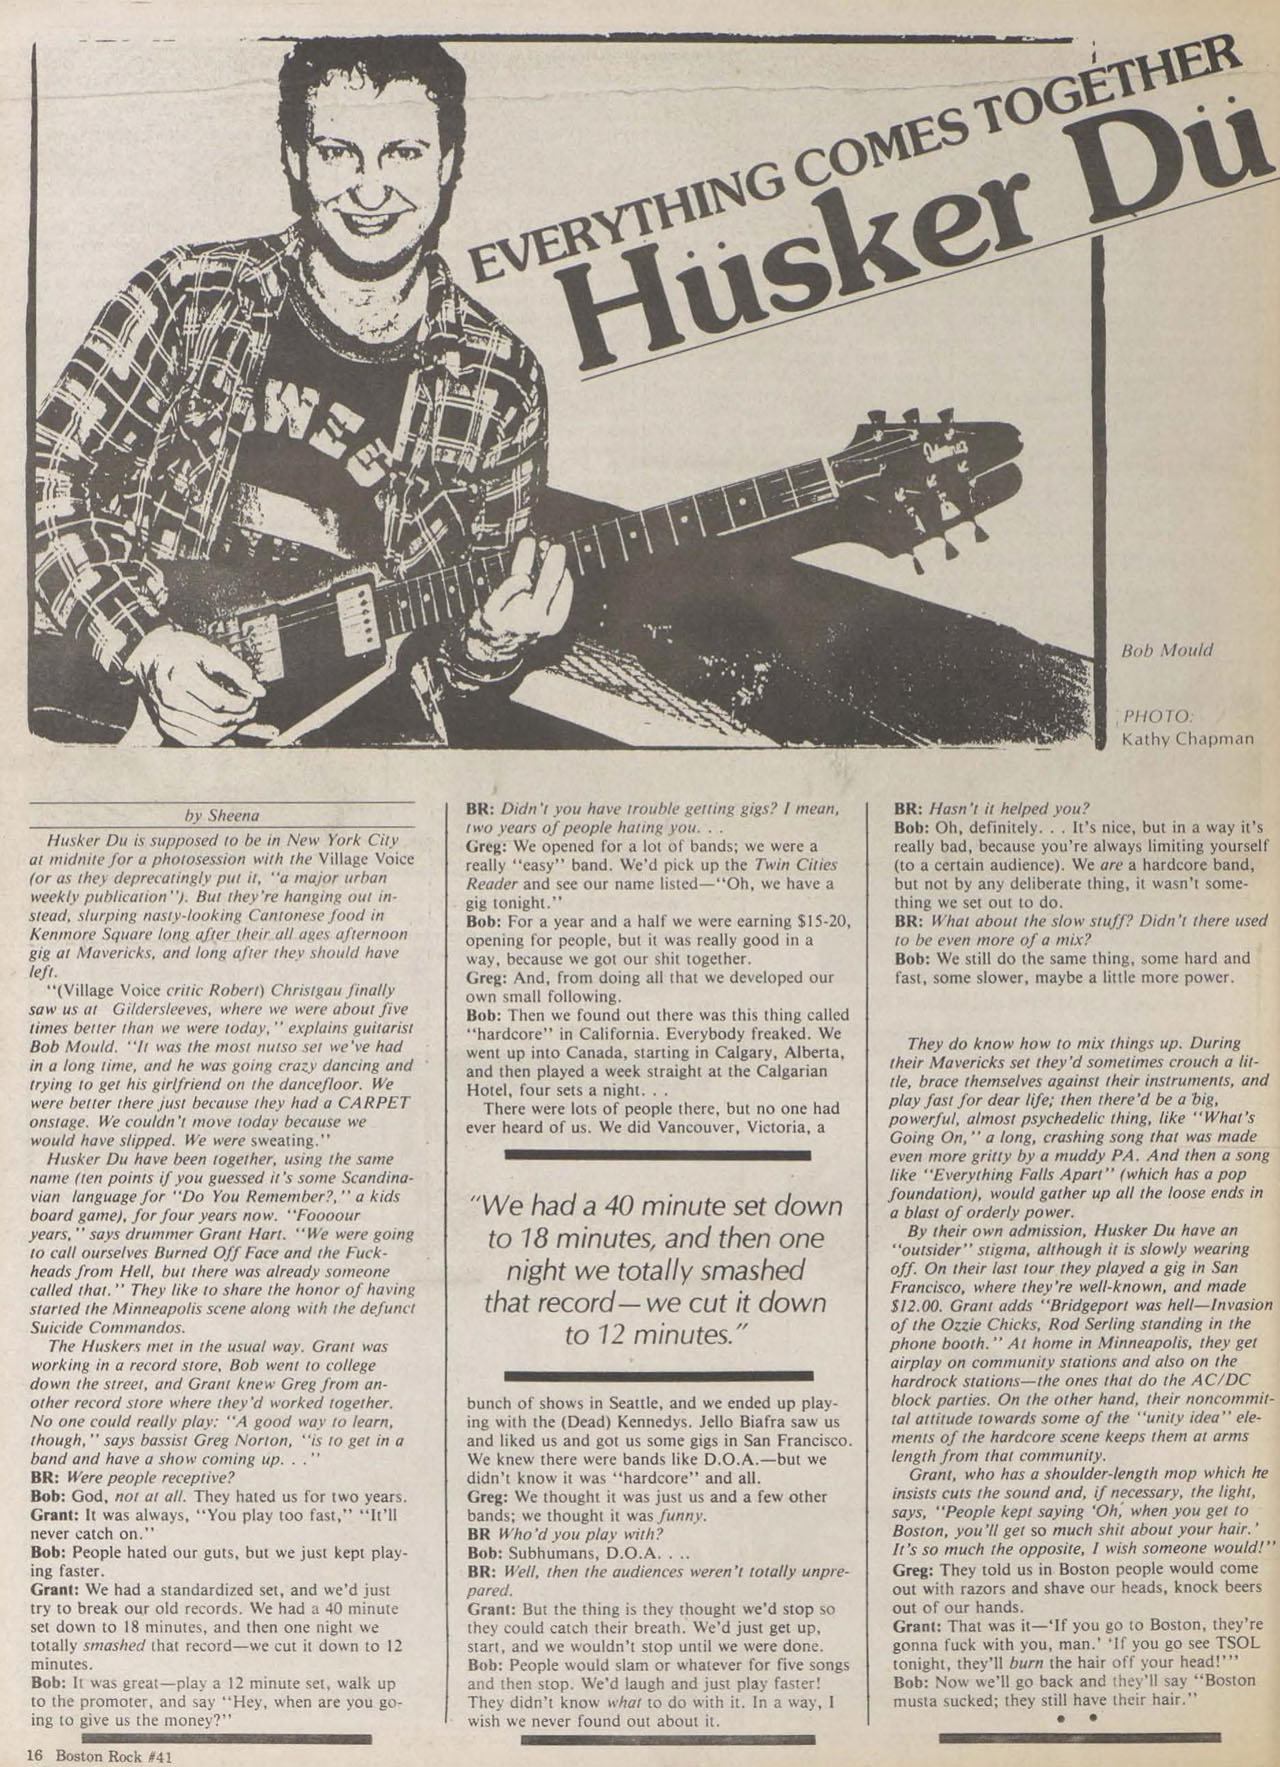 Boston Rock #41, 05 Jul 1983 article